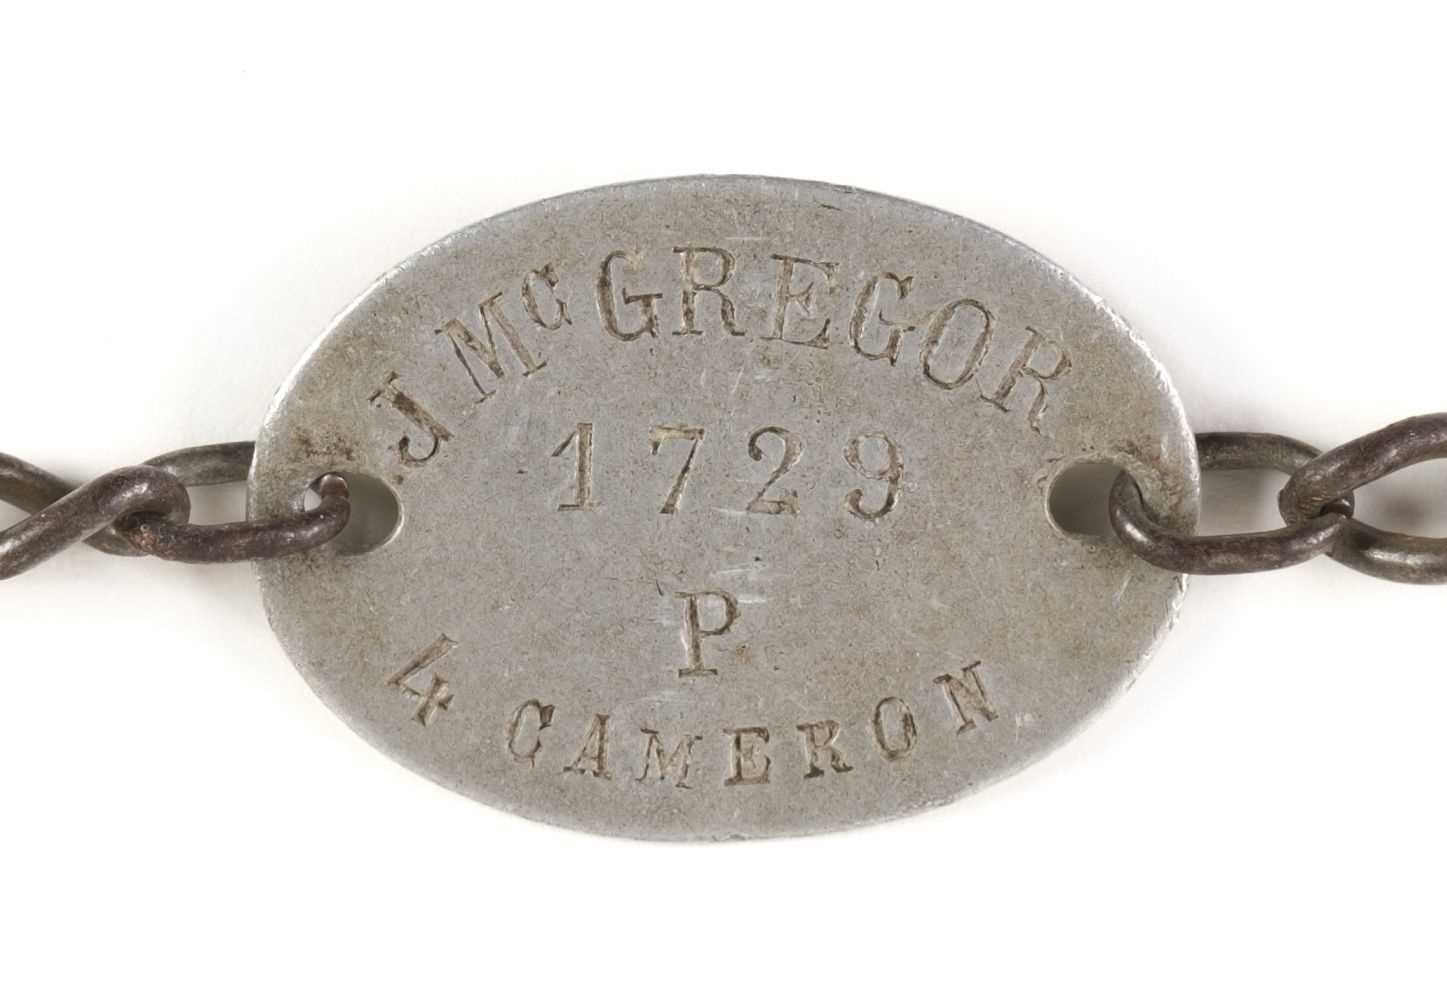 Lot 19 - Victoria Cross Interest. WWI identity bracelet belonging to Corporal James McGregor